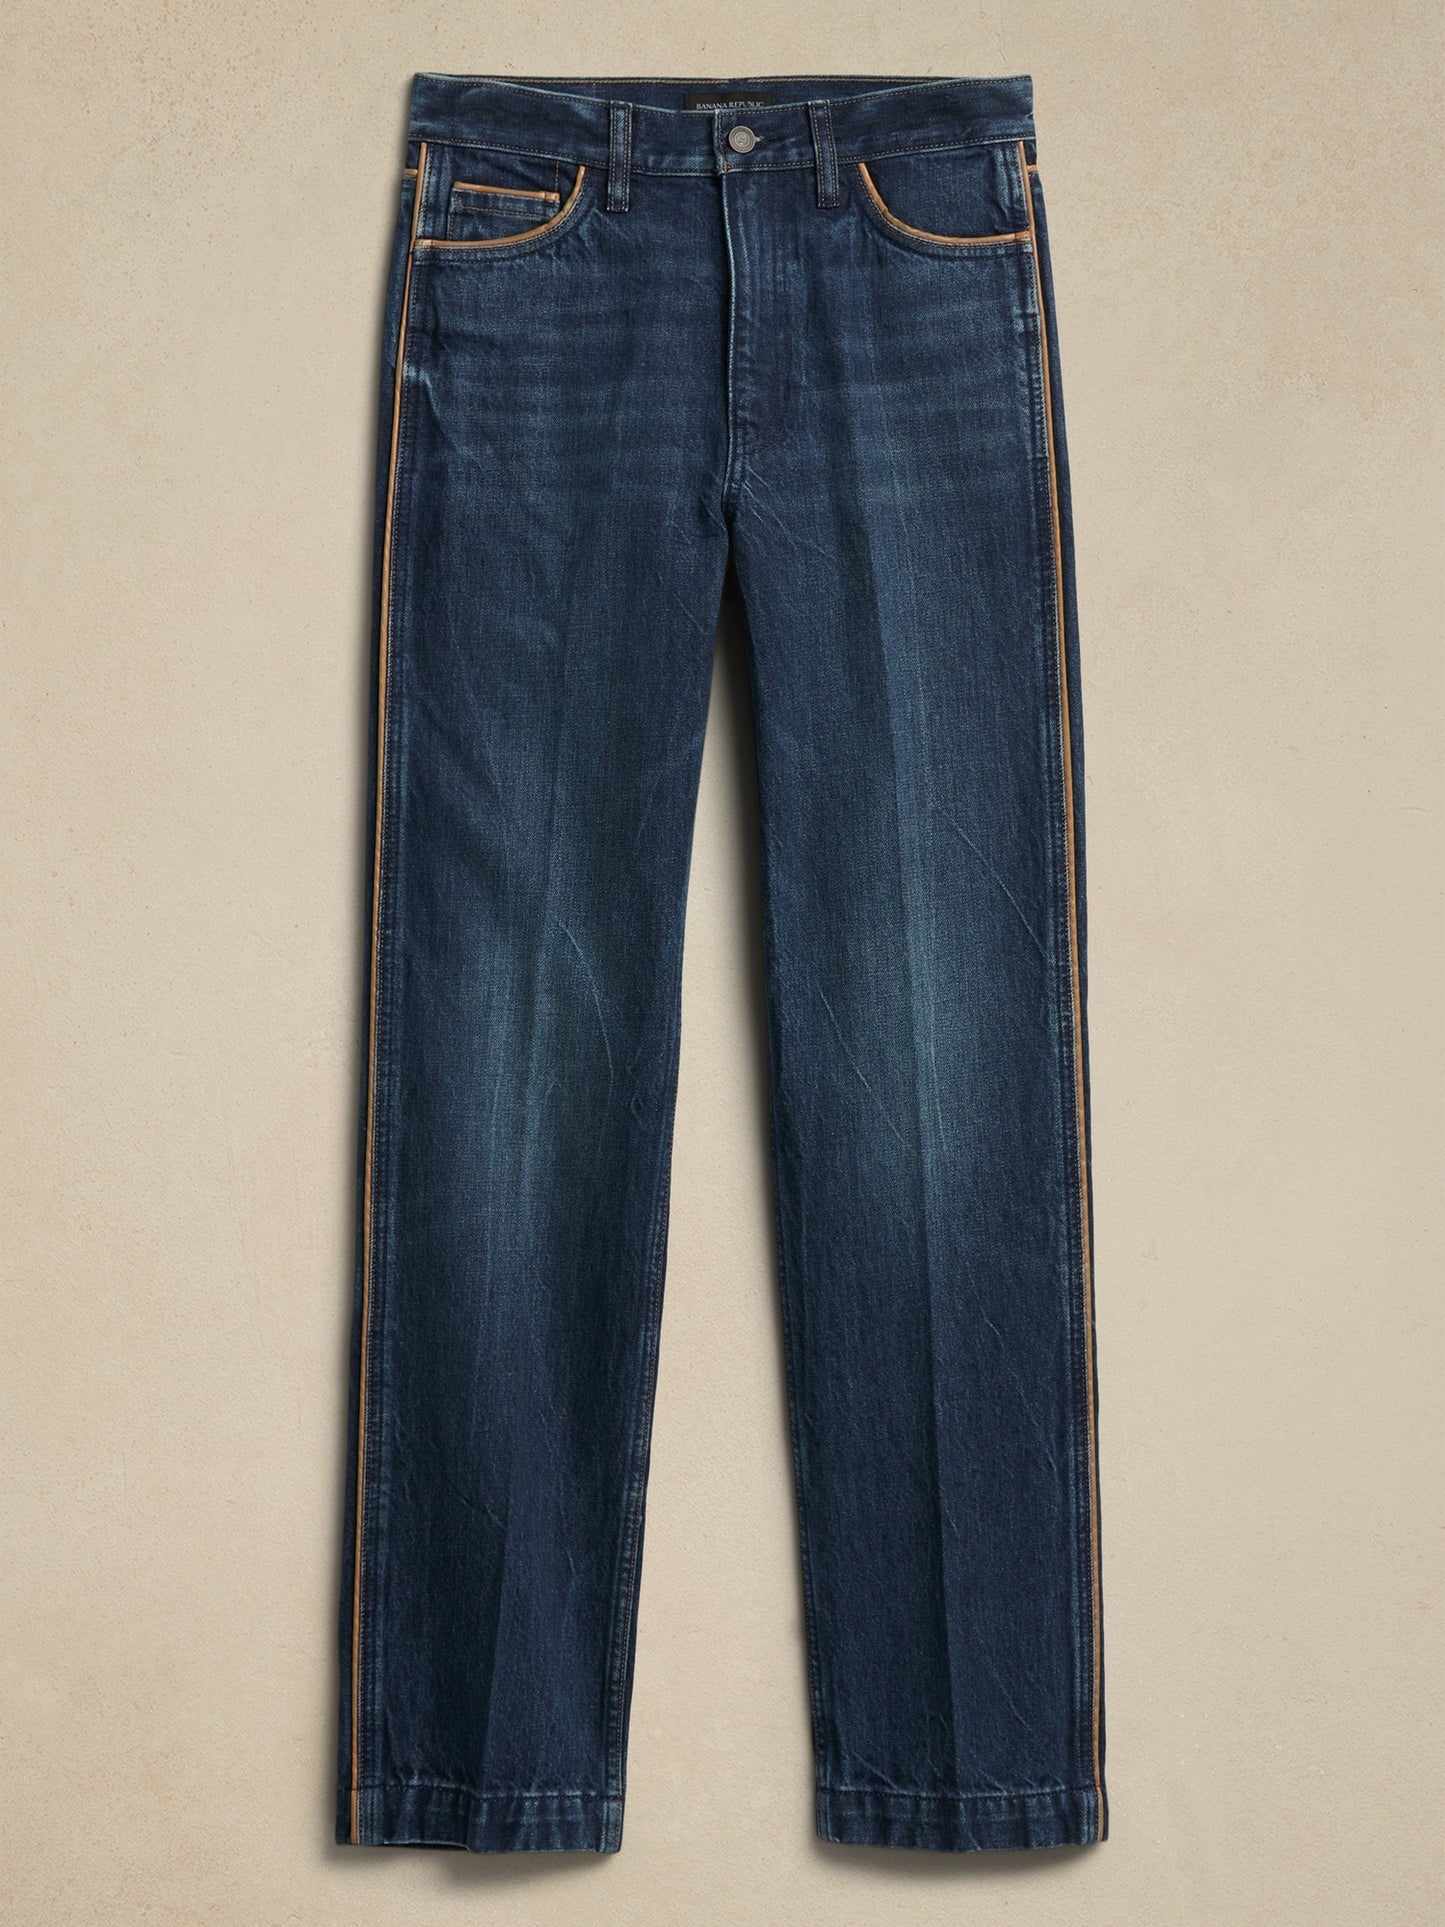 The Roper Vintage Straight Jean